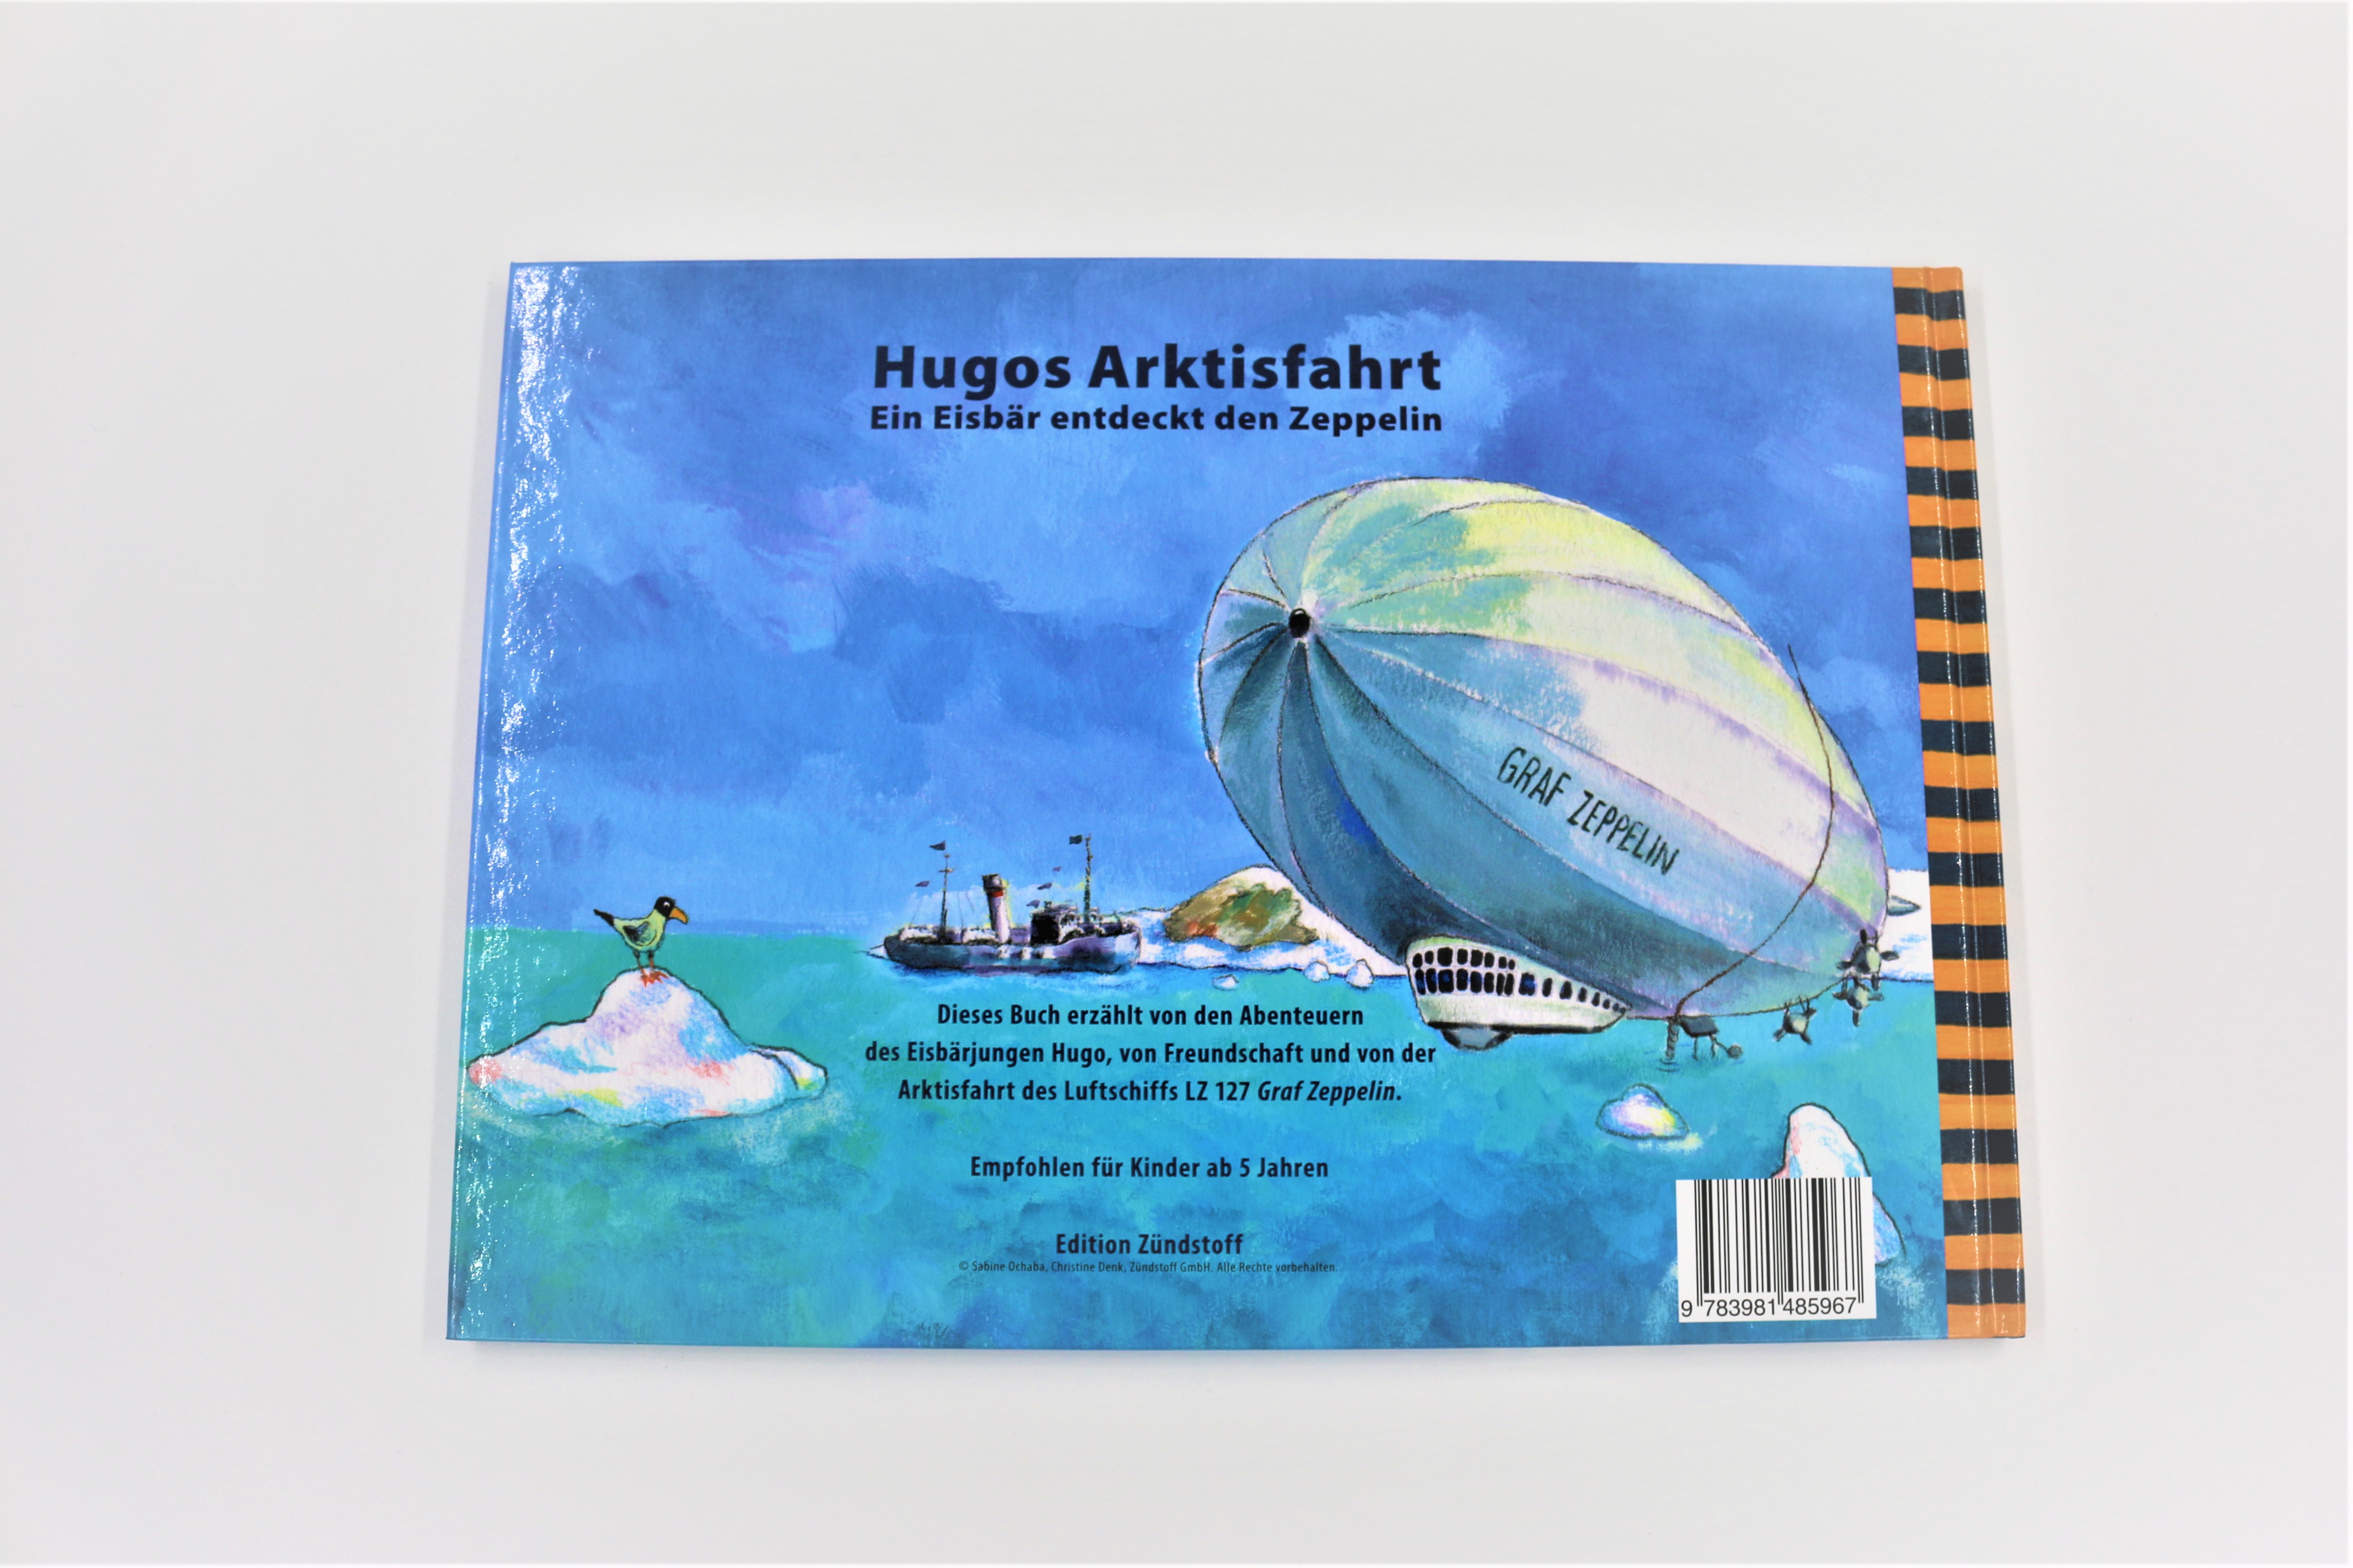 Sabine Ochaba: Hugos Arktisfahrt - Ein Eisbär entdeckt den Zeppelin